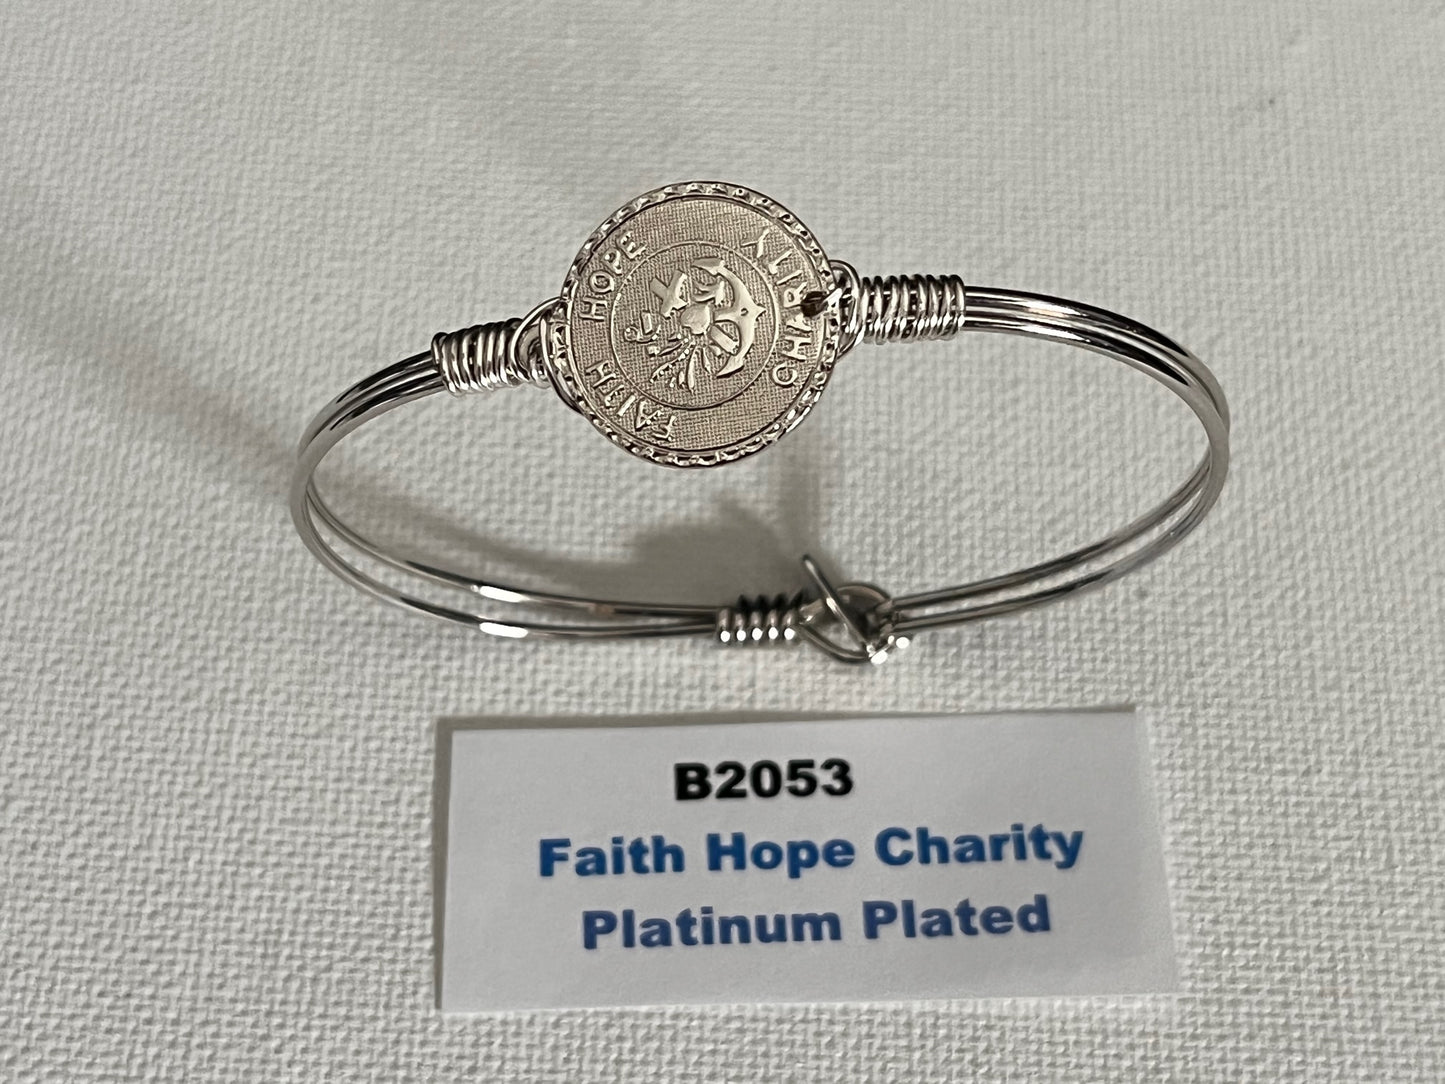 Faith, Hope & Charity - Token of Love Handmade Gold or Silver Bracelets  22k Gold Plated, Platinum Silver Plated, Matte Gold Plated, or Matte Silver Plated